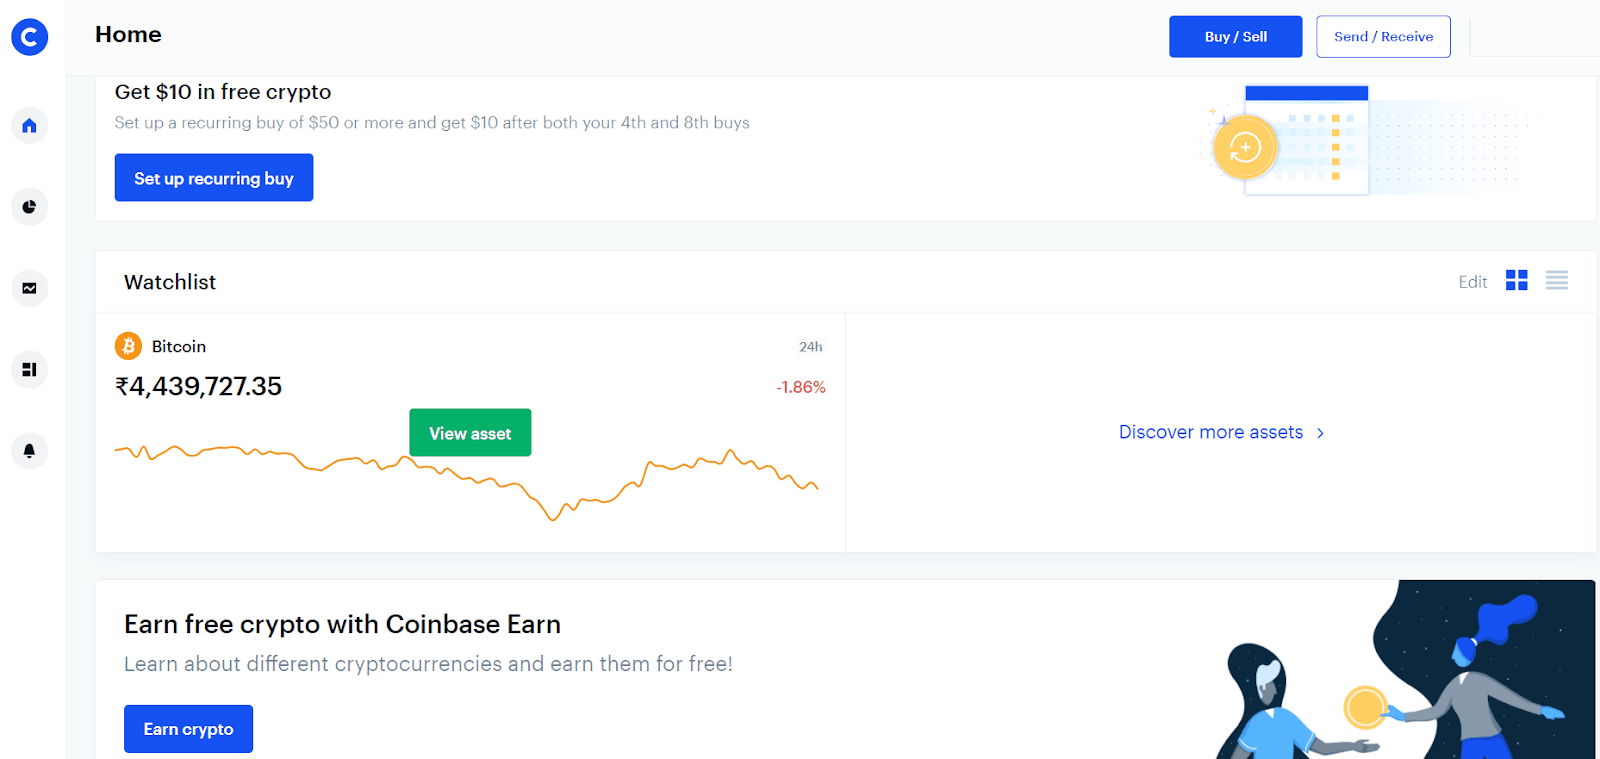 Coinbase: Buy and Sell Crypto